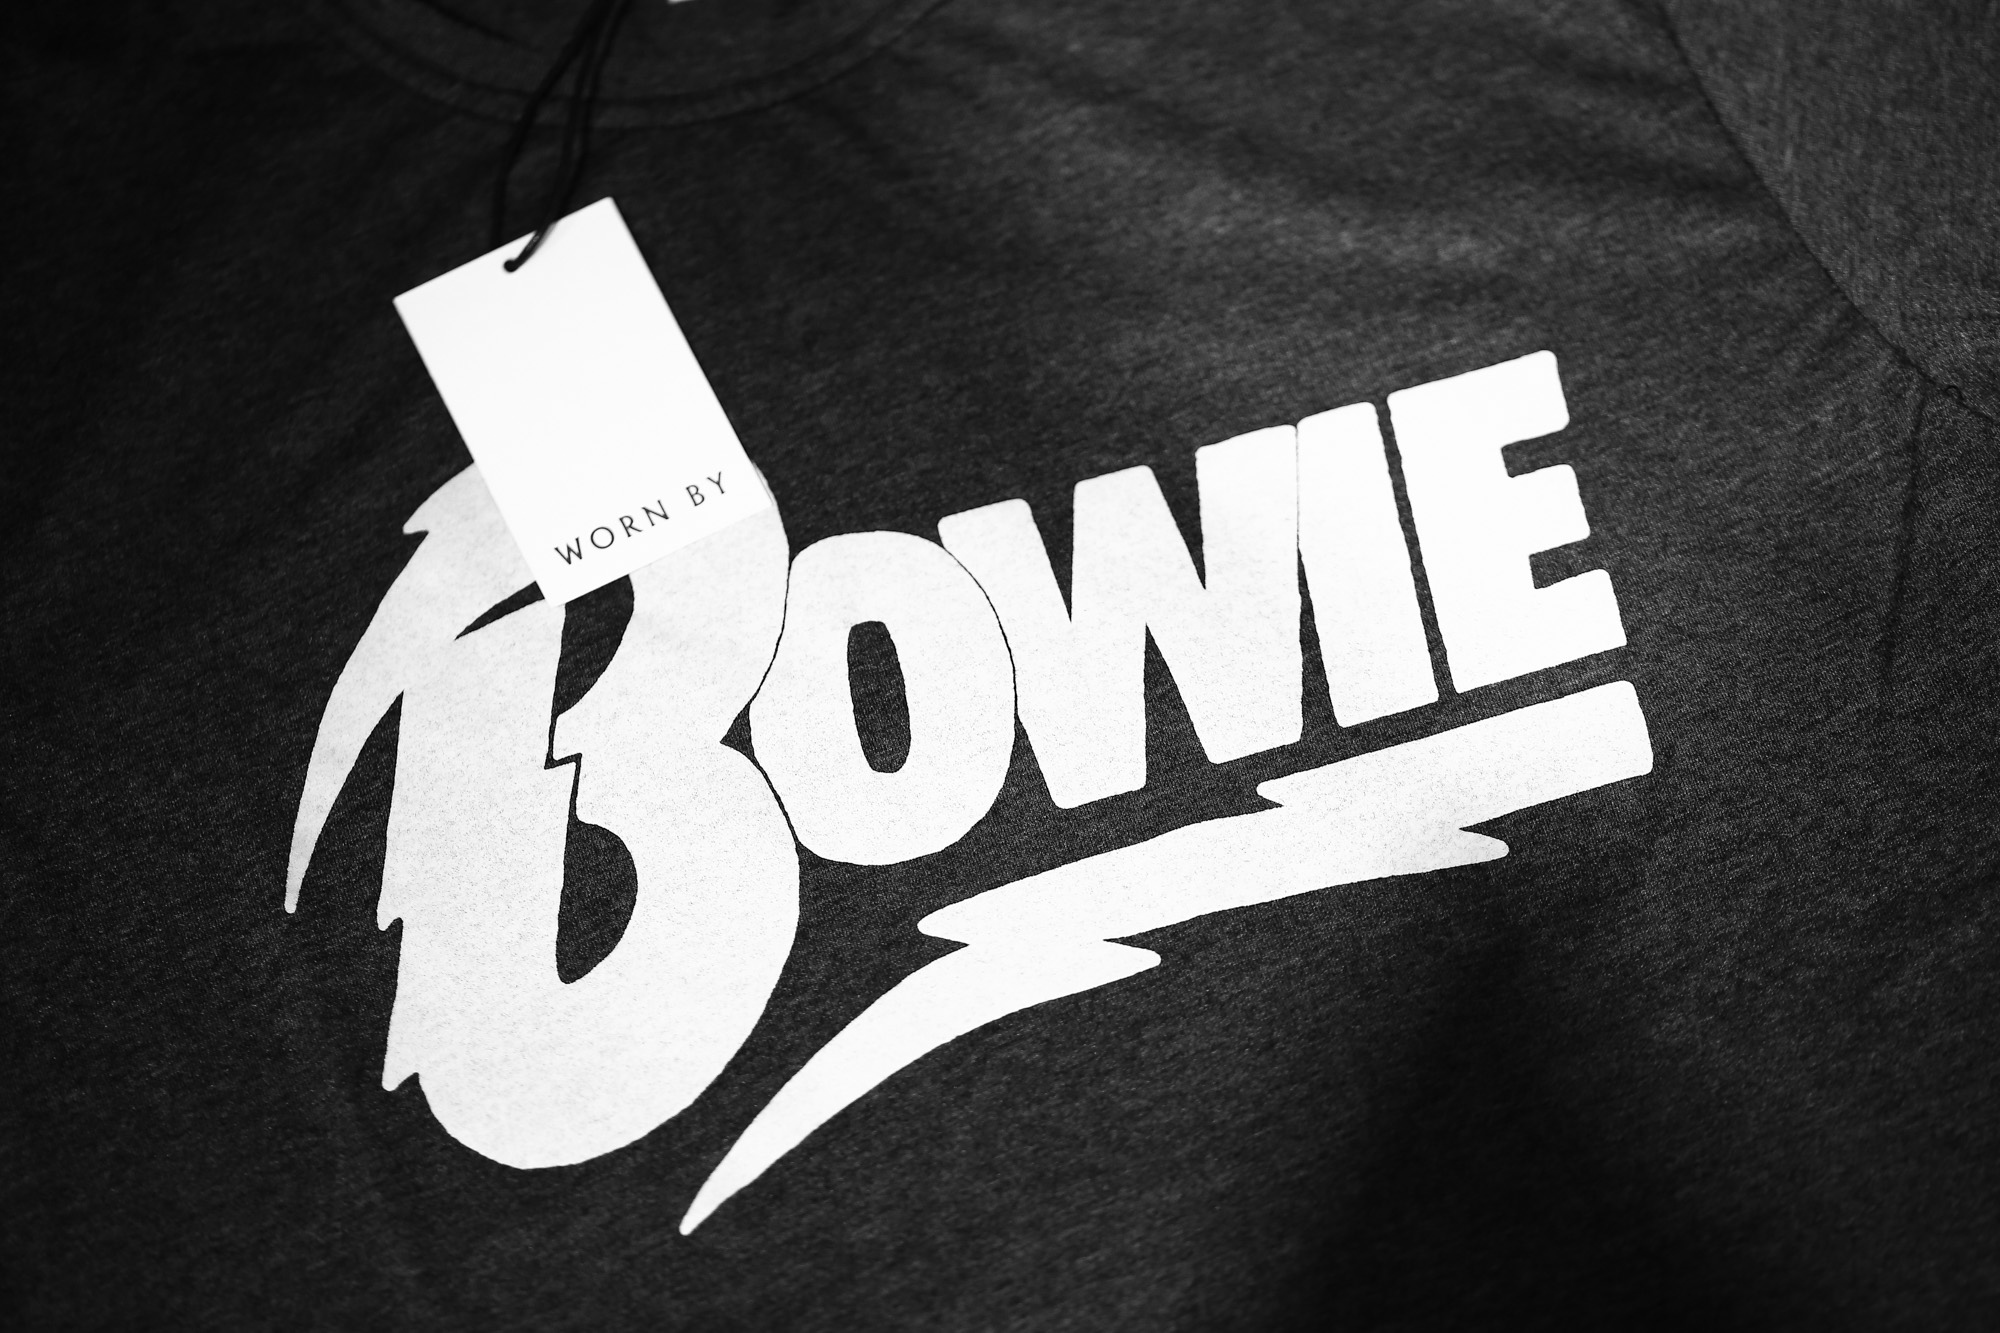 Worn By (ウォーンバイ) BOWIE LOGO BURN OUT David Bowie ボウイロゴバーンアウト デヴィッド・ボウイ 復刻オフィシャルライセンスTシャツ ロックTシャツ バンドTシャツ BLACK BURN OUT (ブラックバーンアウト) 2017 春夏新作 愛知 名古屋 Alto e Diritto アルト エ デリット wornby davidbowie S,M,L